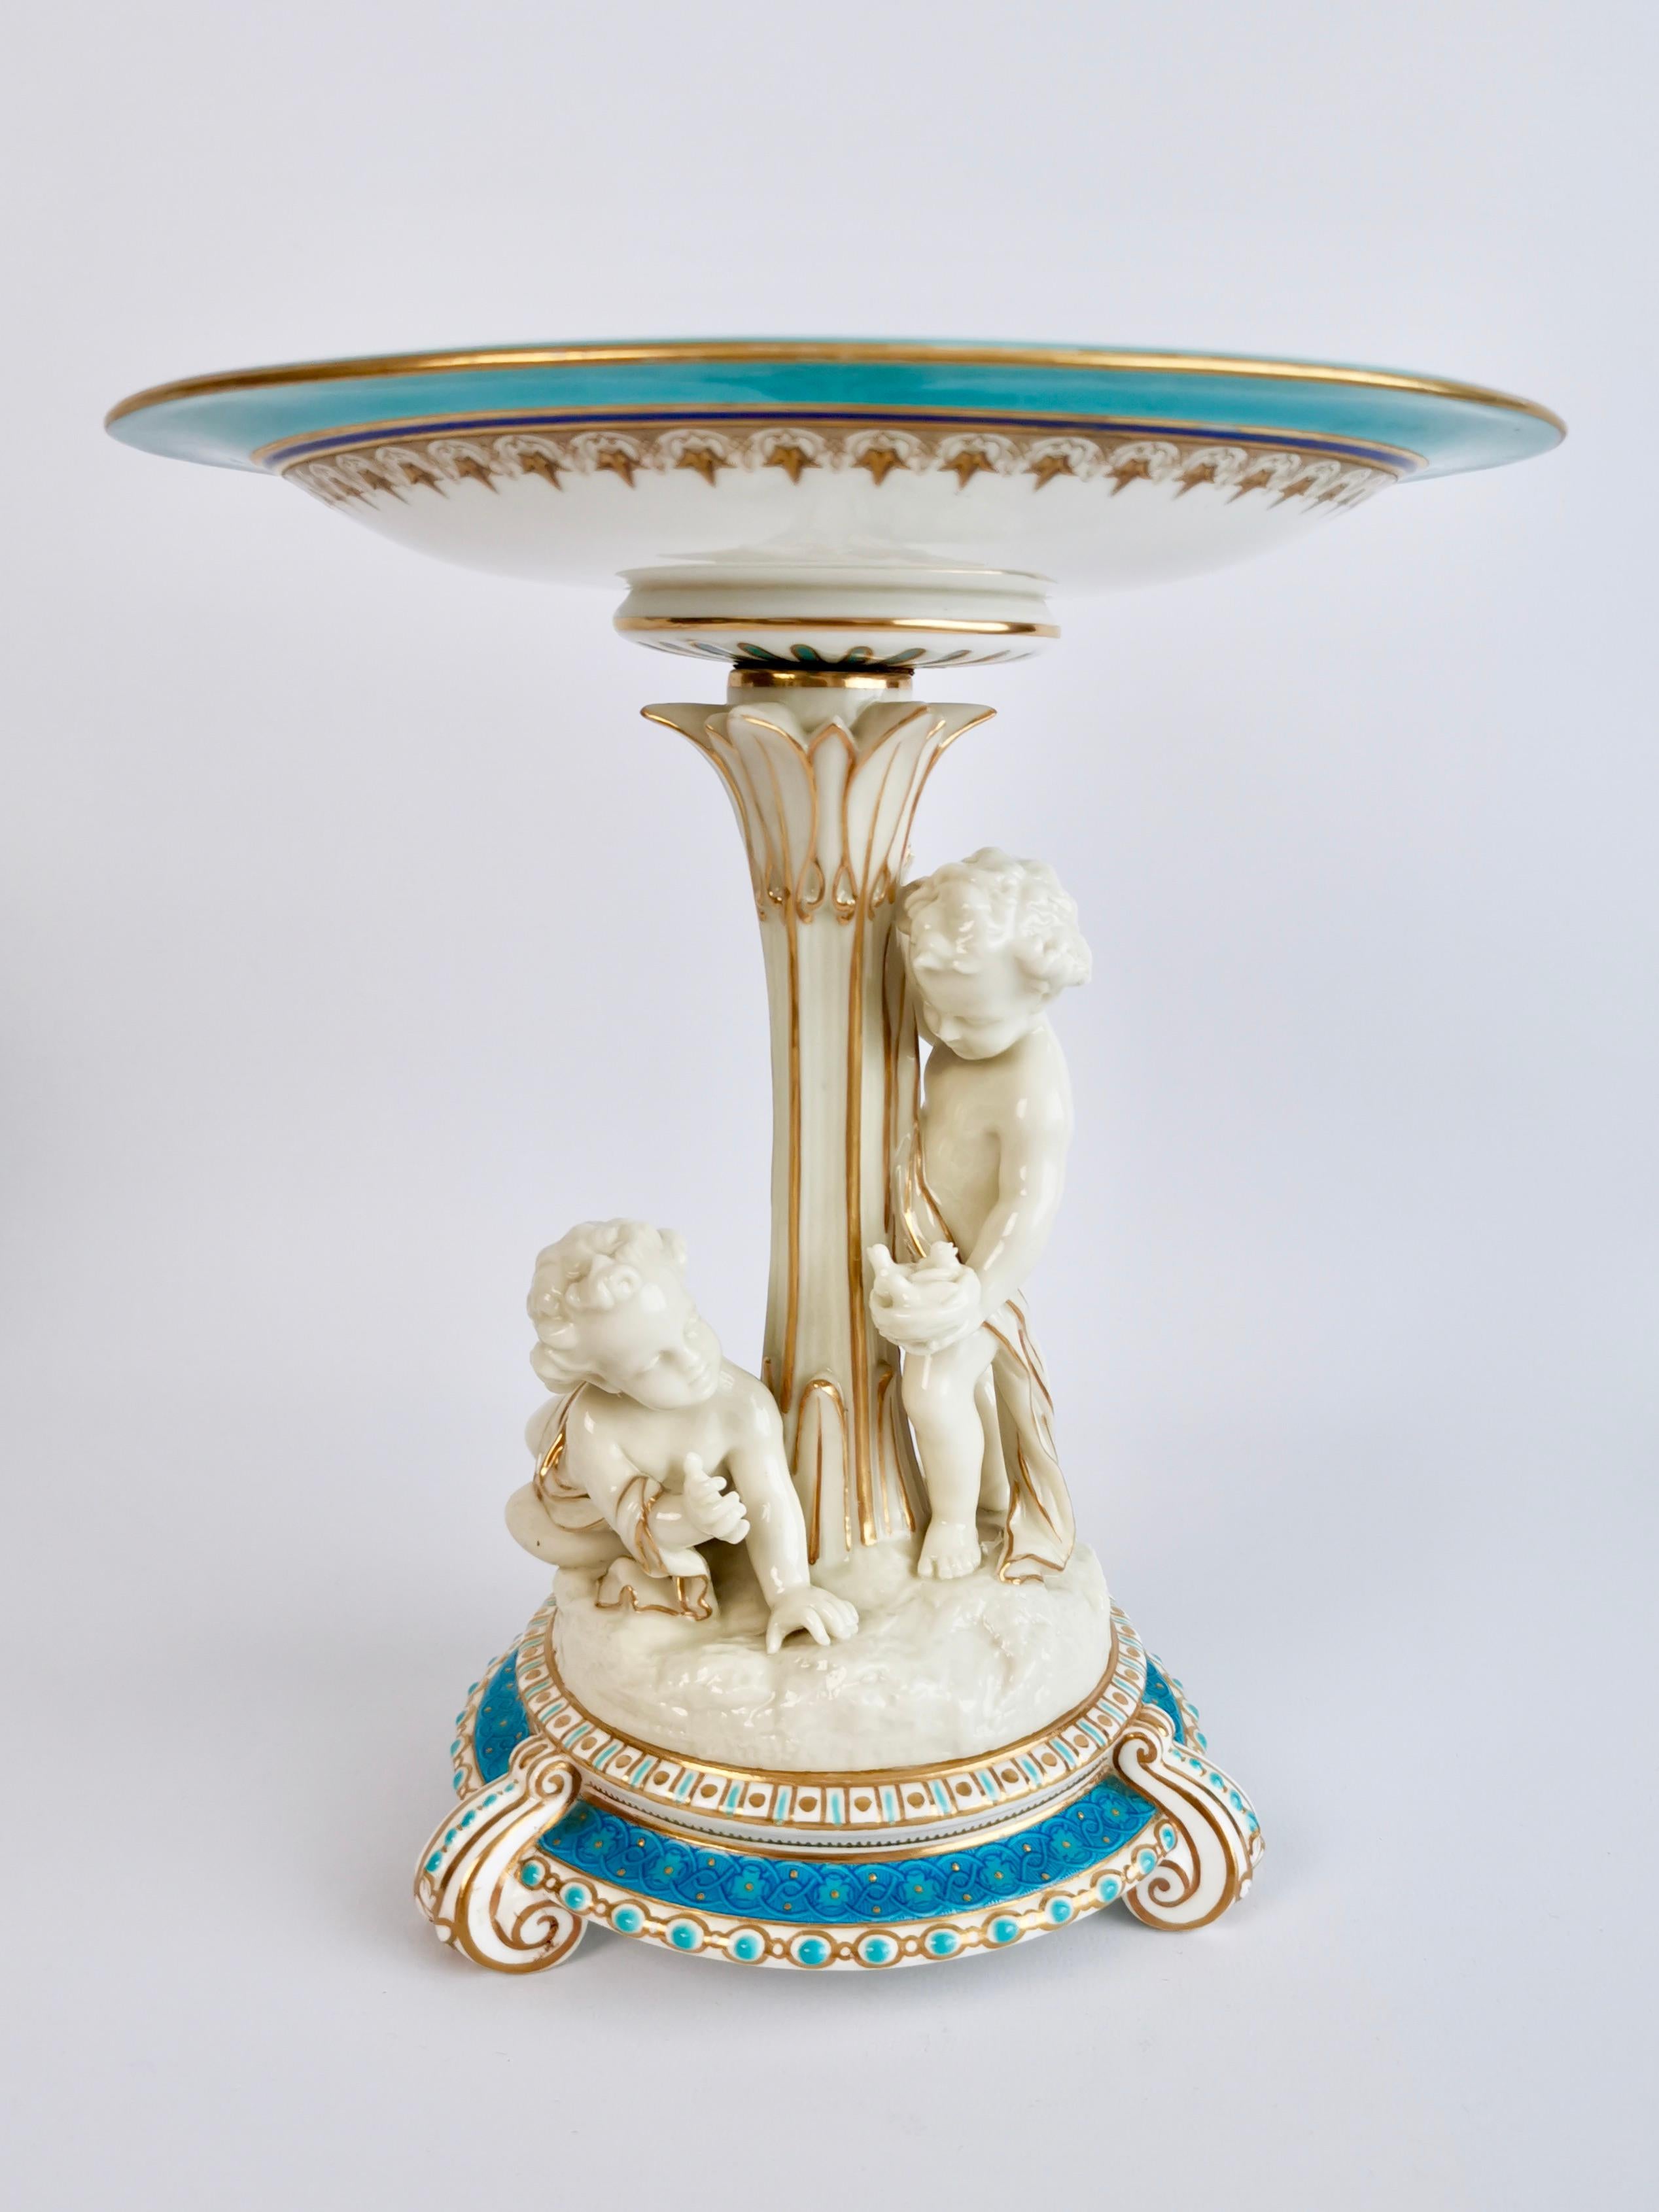 Edwardian Royal Worcester Porcelain Dessert Service, Turquoise with Parian Cherubs, 1910